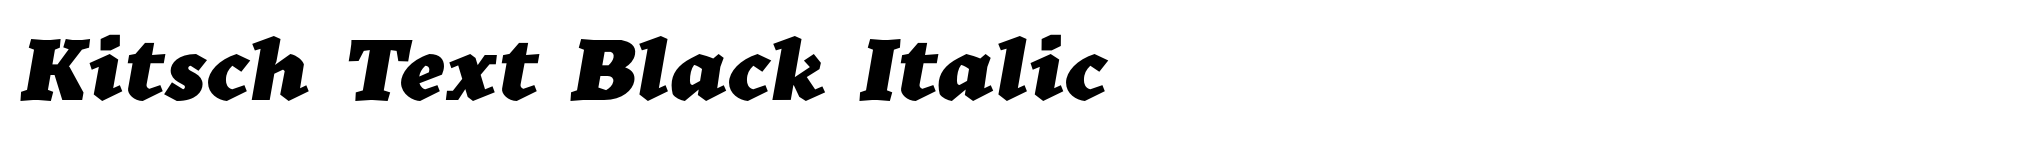 Kitsch Text Black Italic image